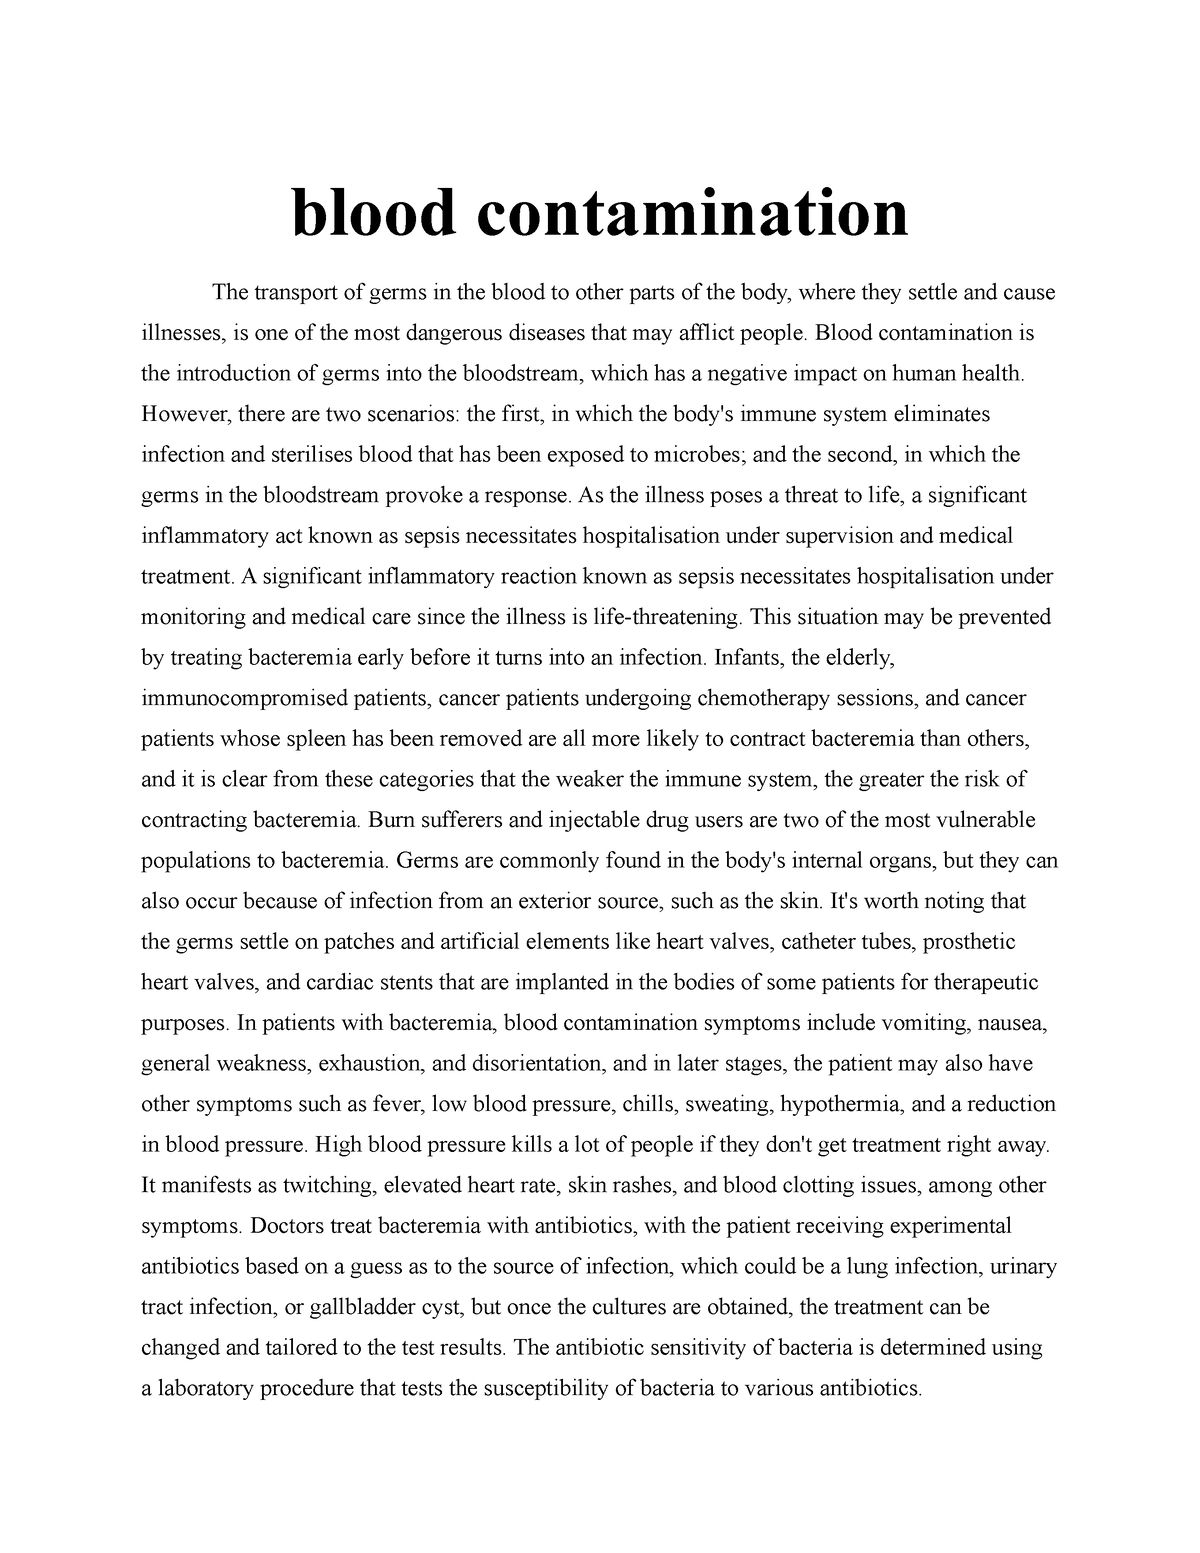 essay on blood cells